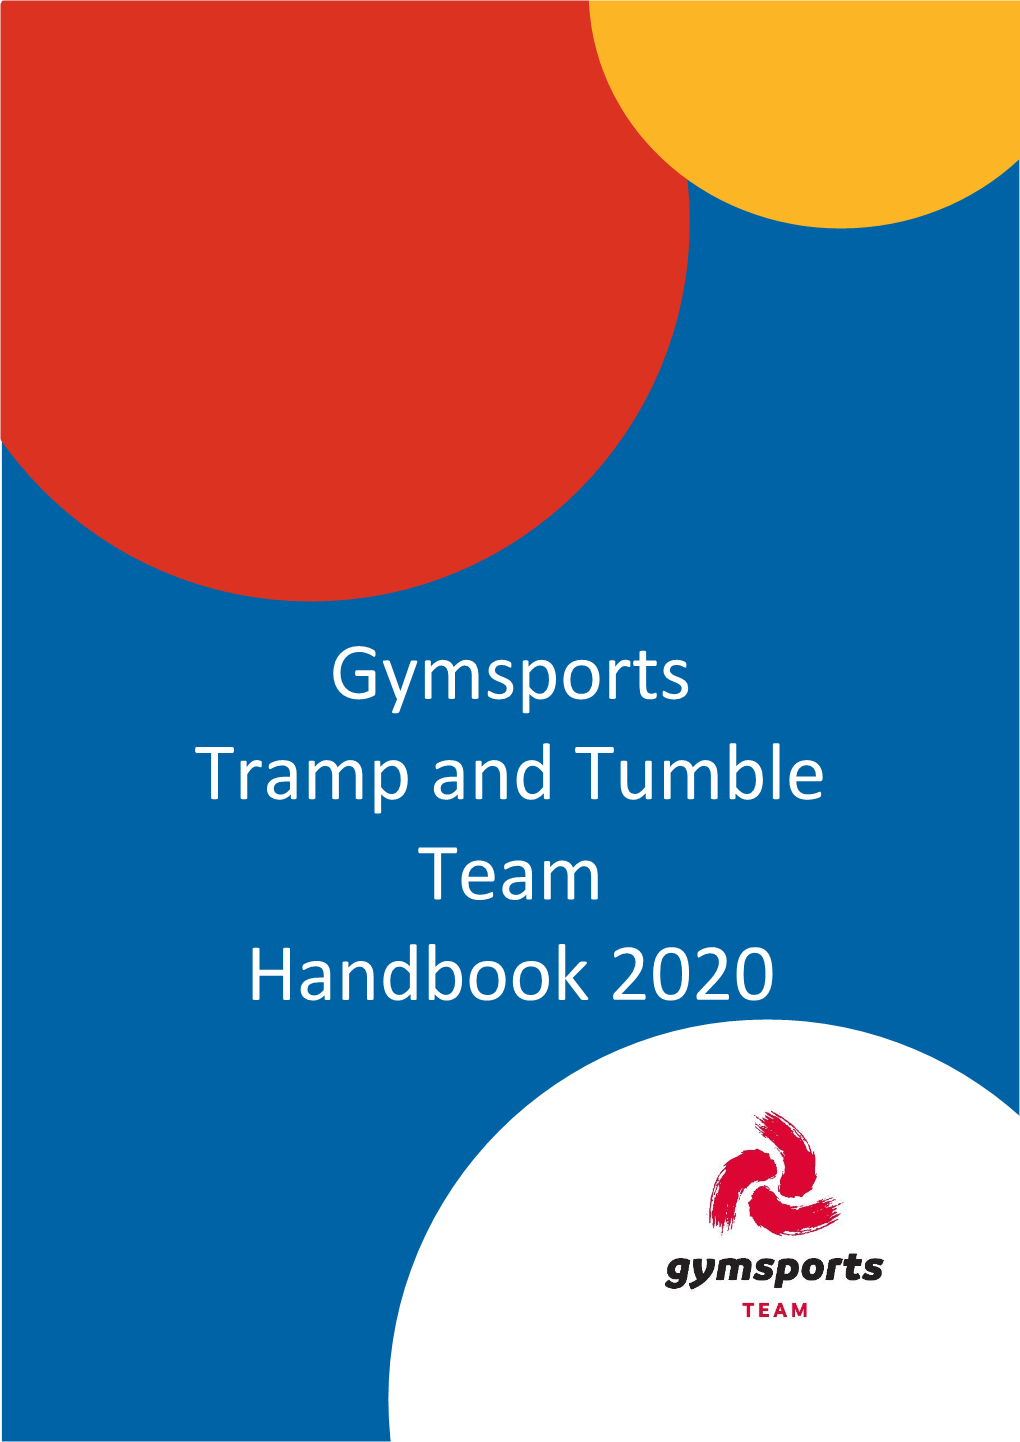 Gymsports Tramp and Tumble Team Handbook 2020